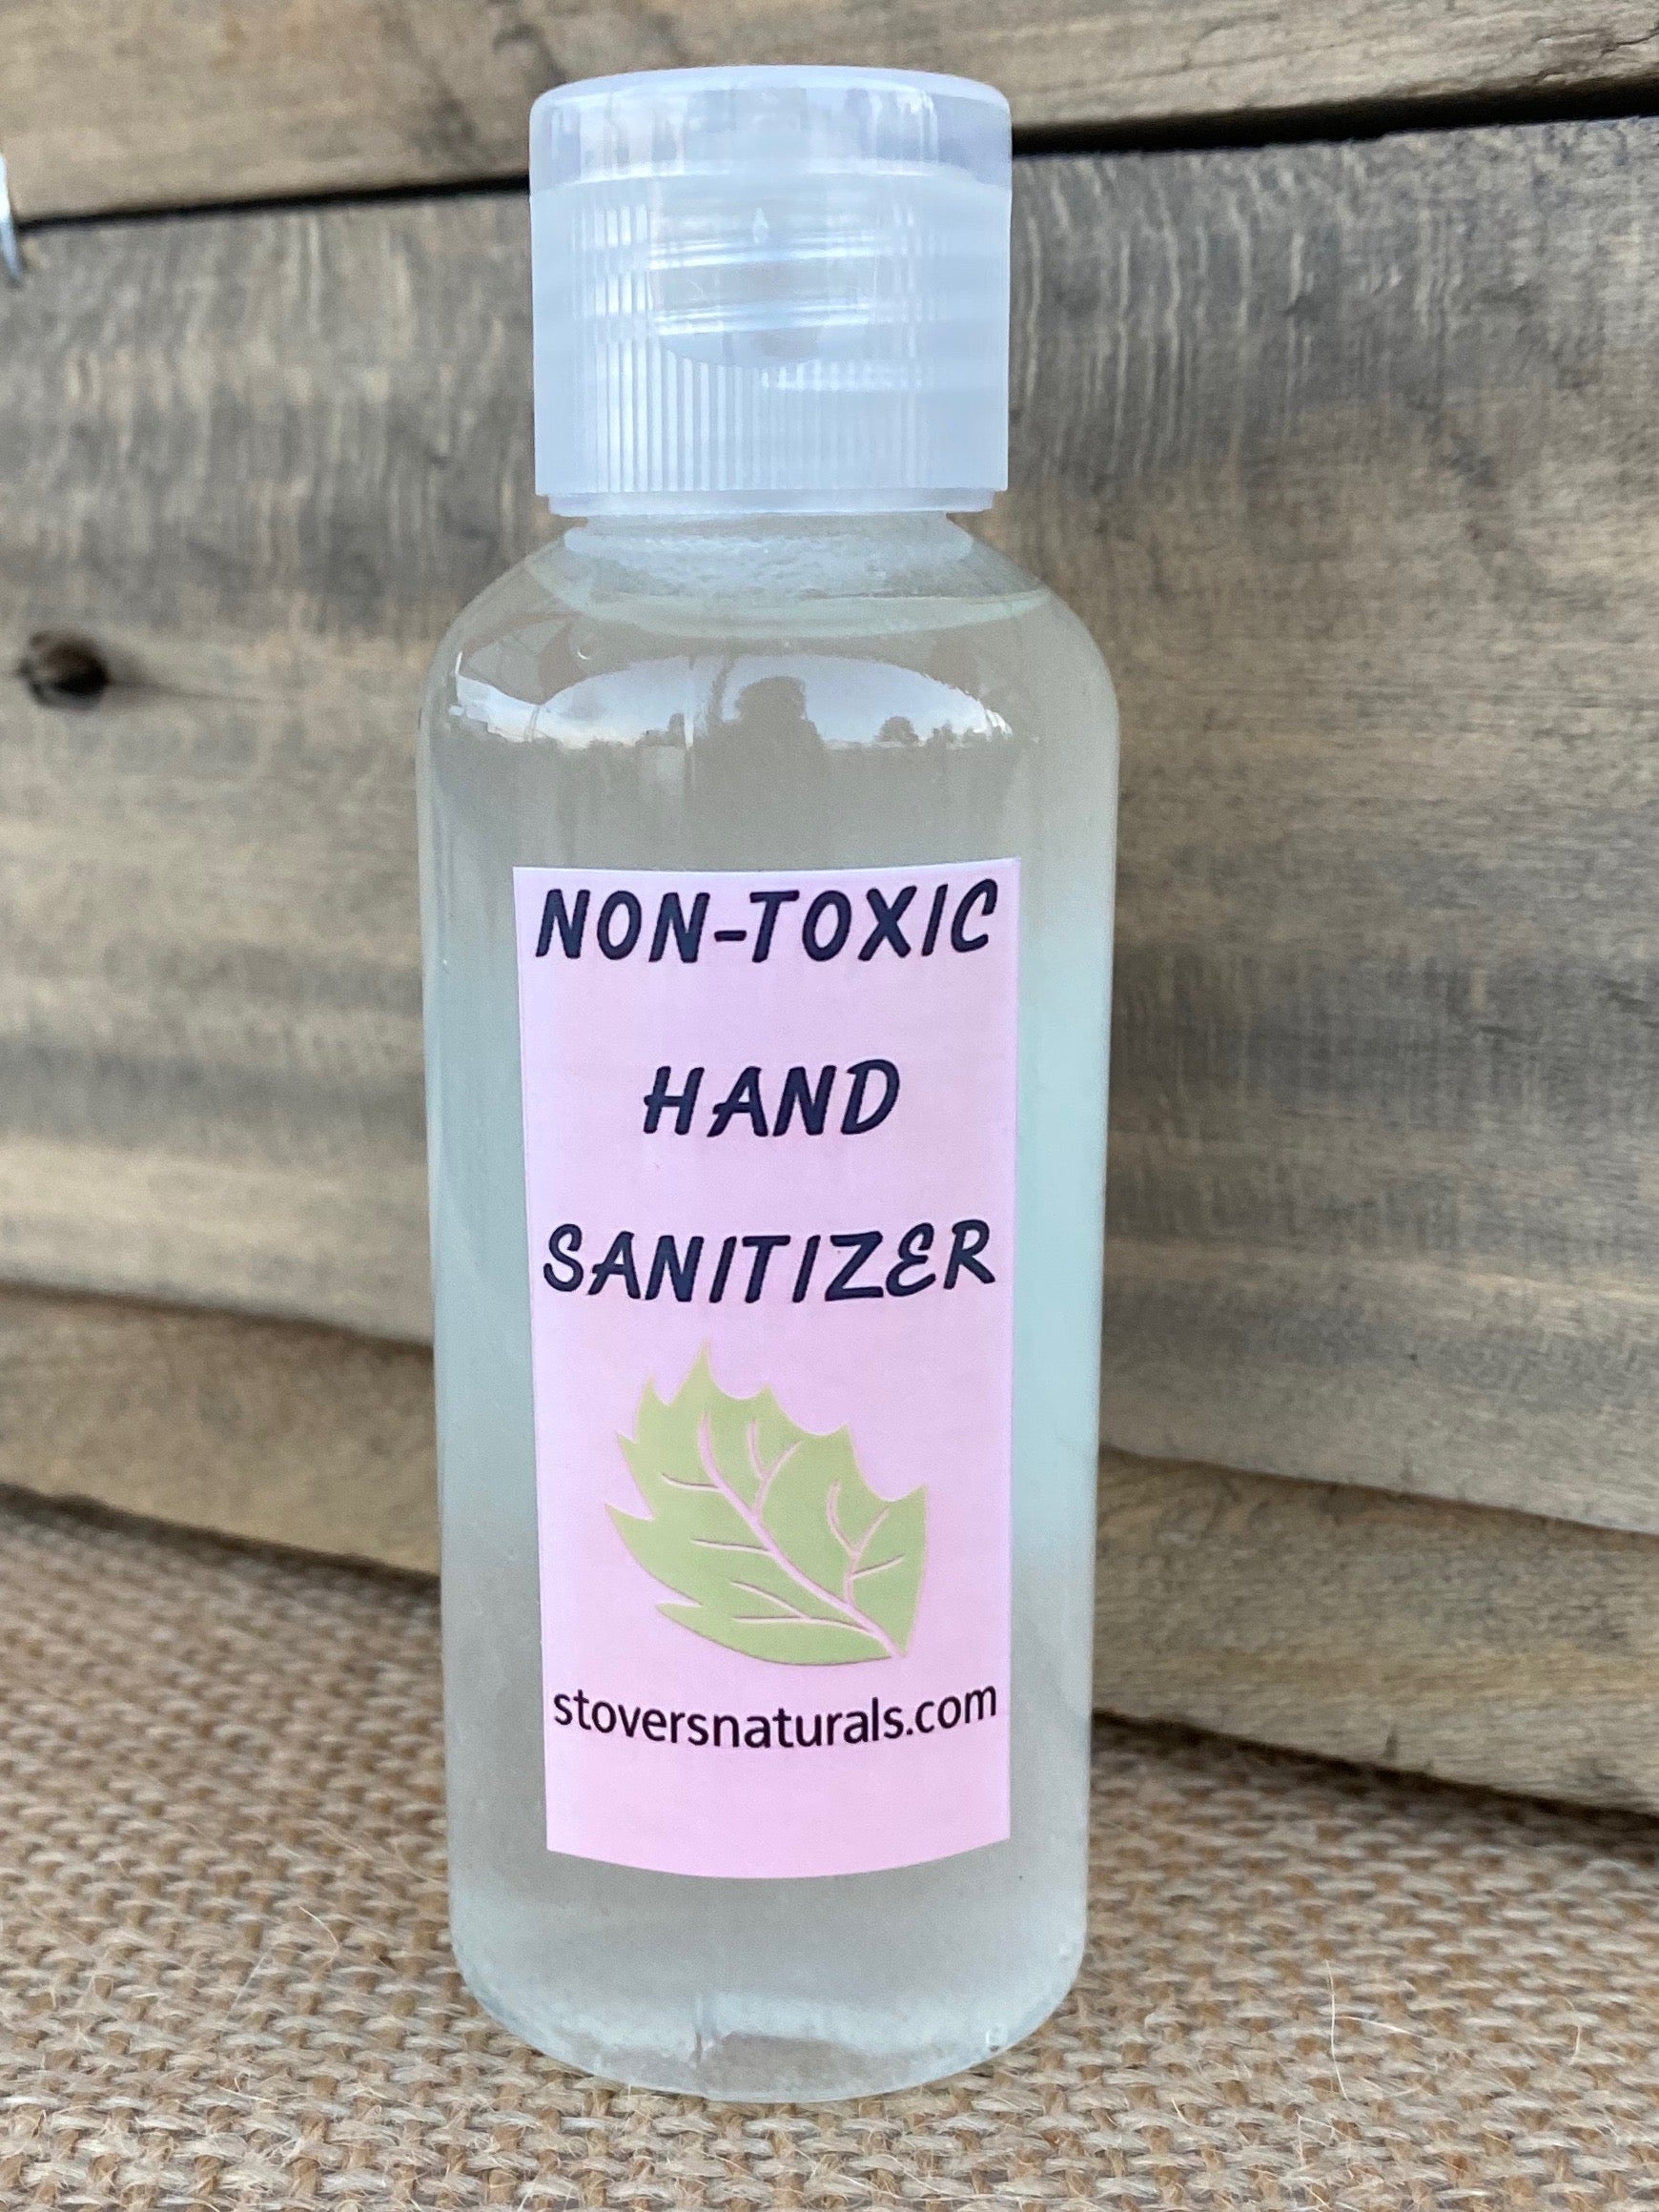 Non-toxic hand sanitizer